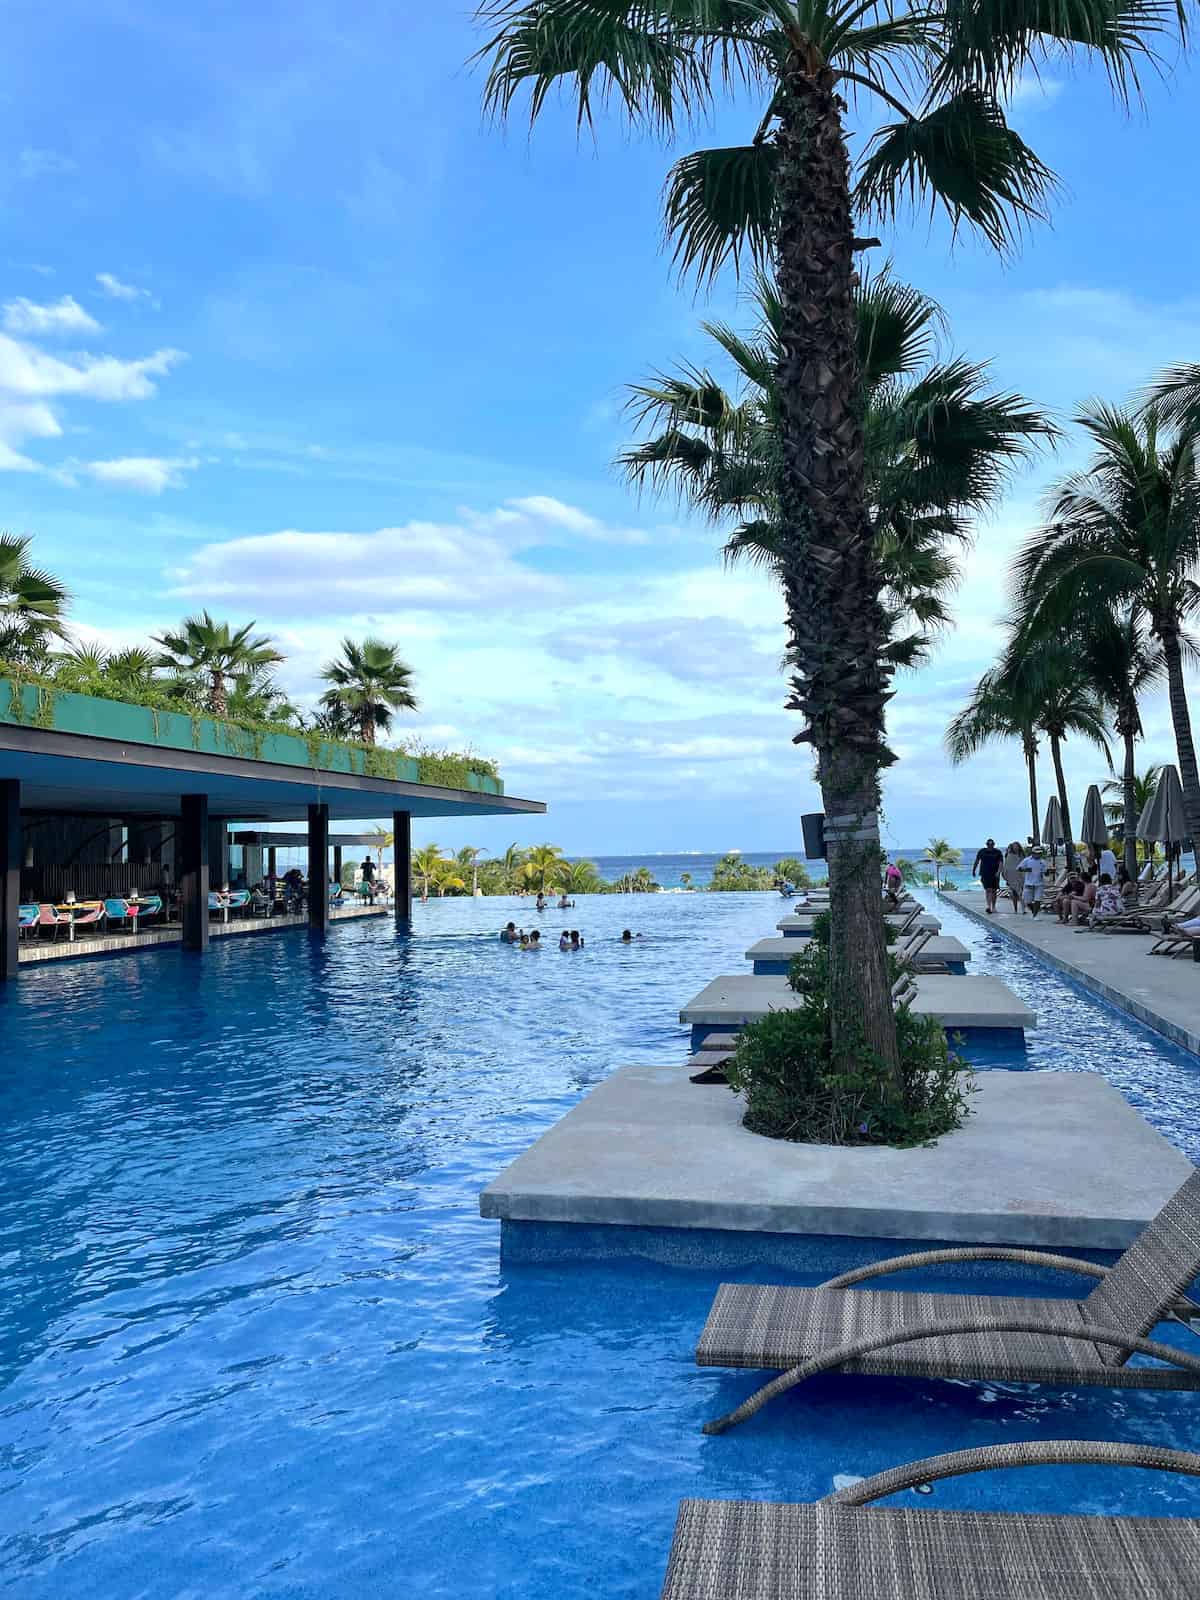 Main pool at Hotel Xcaret Mexico.